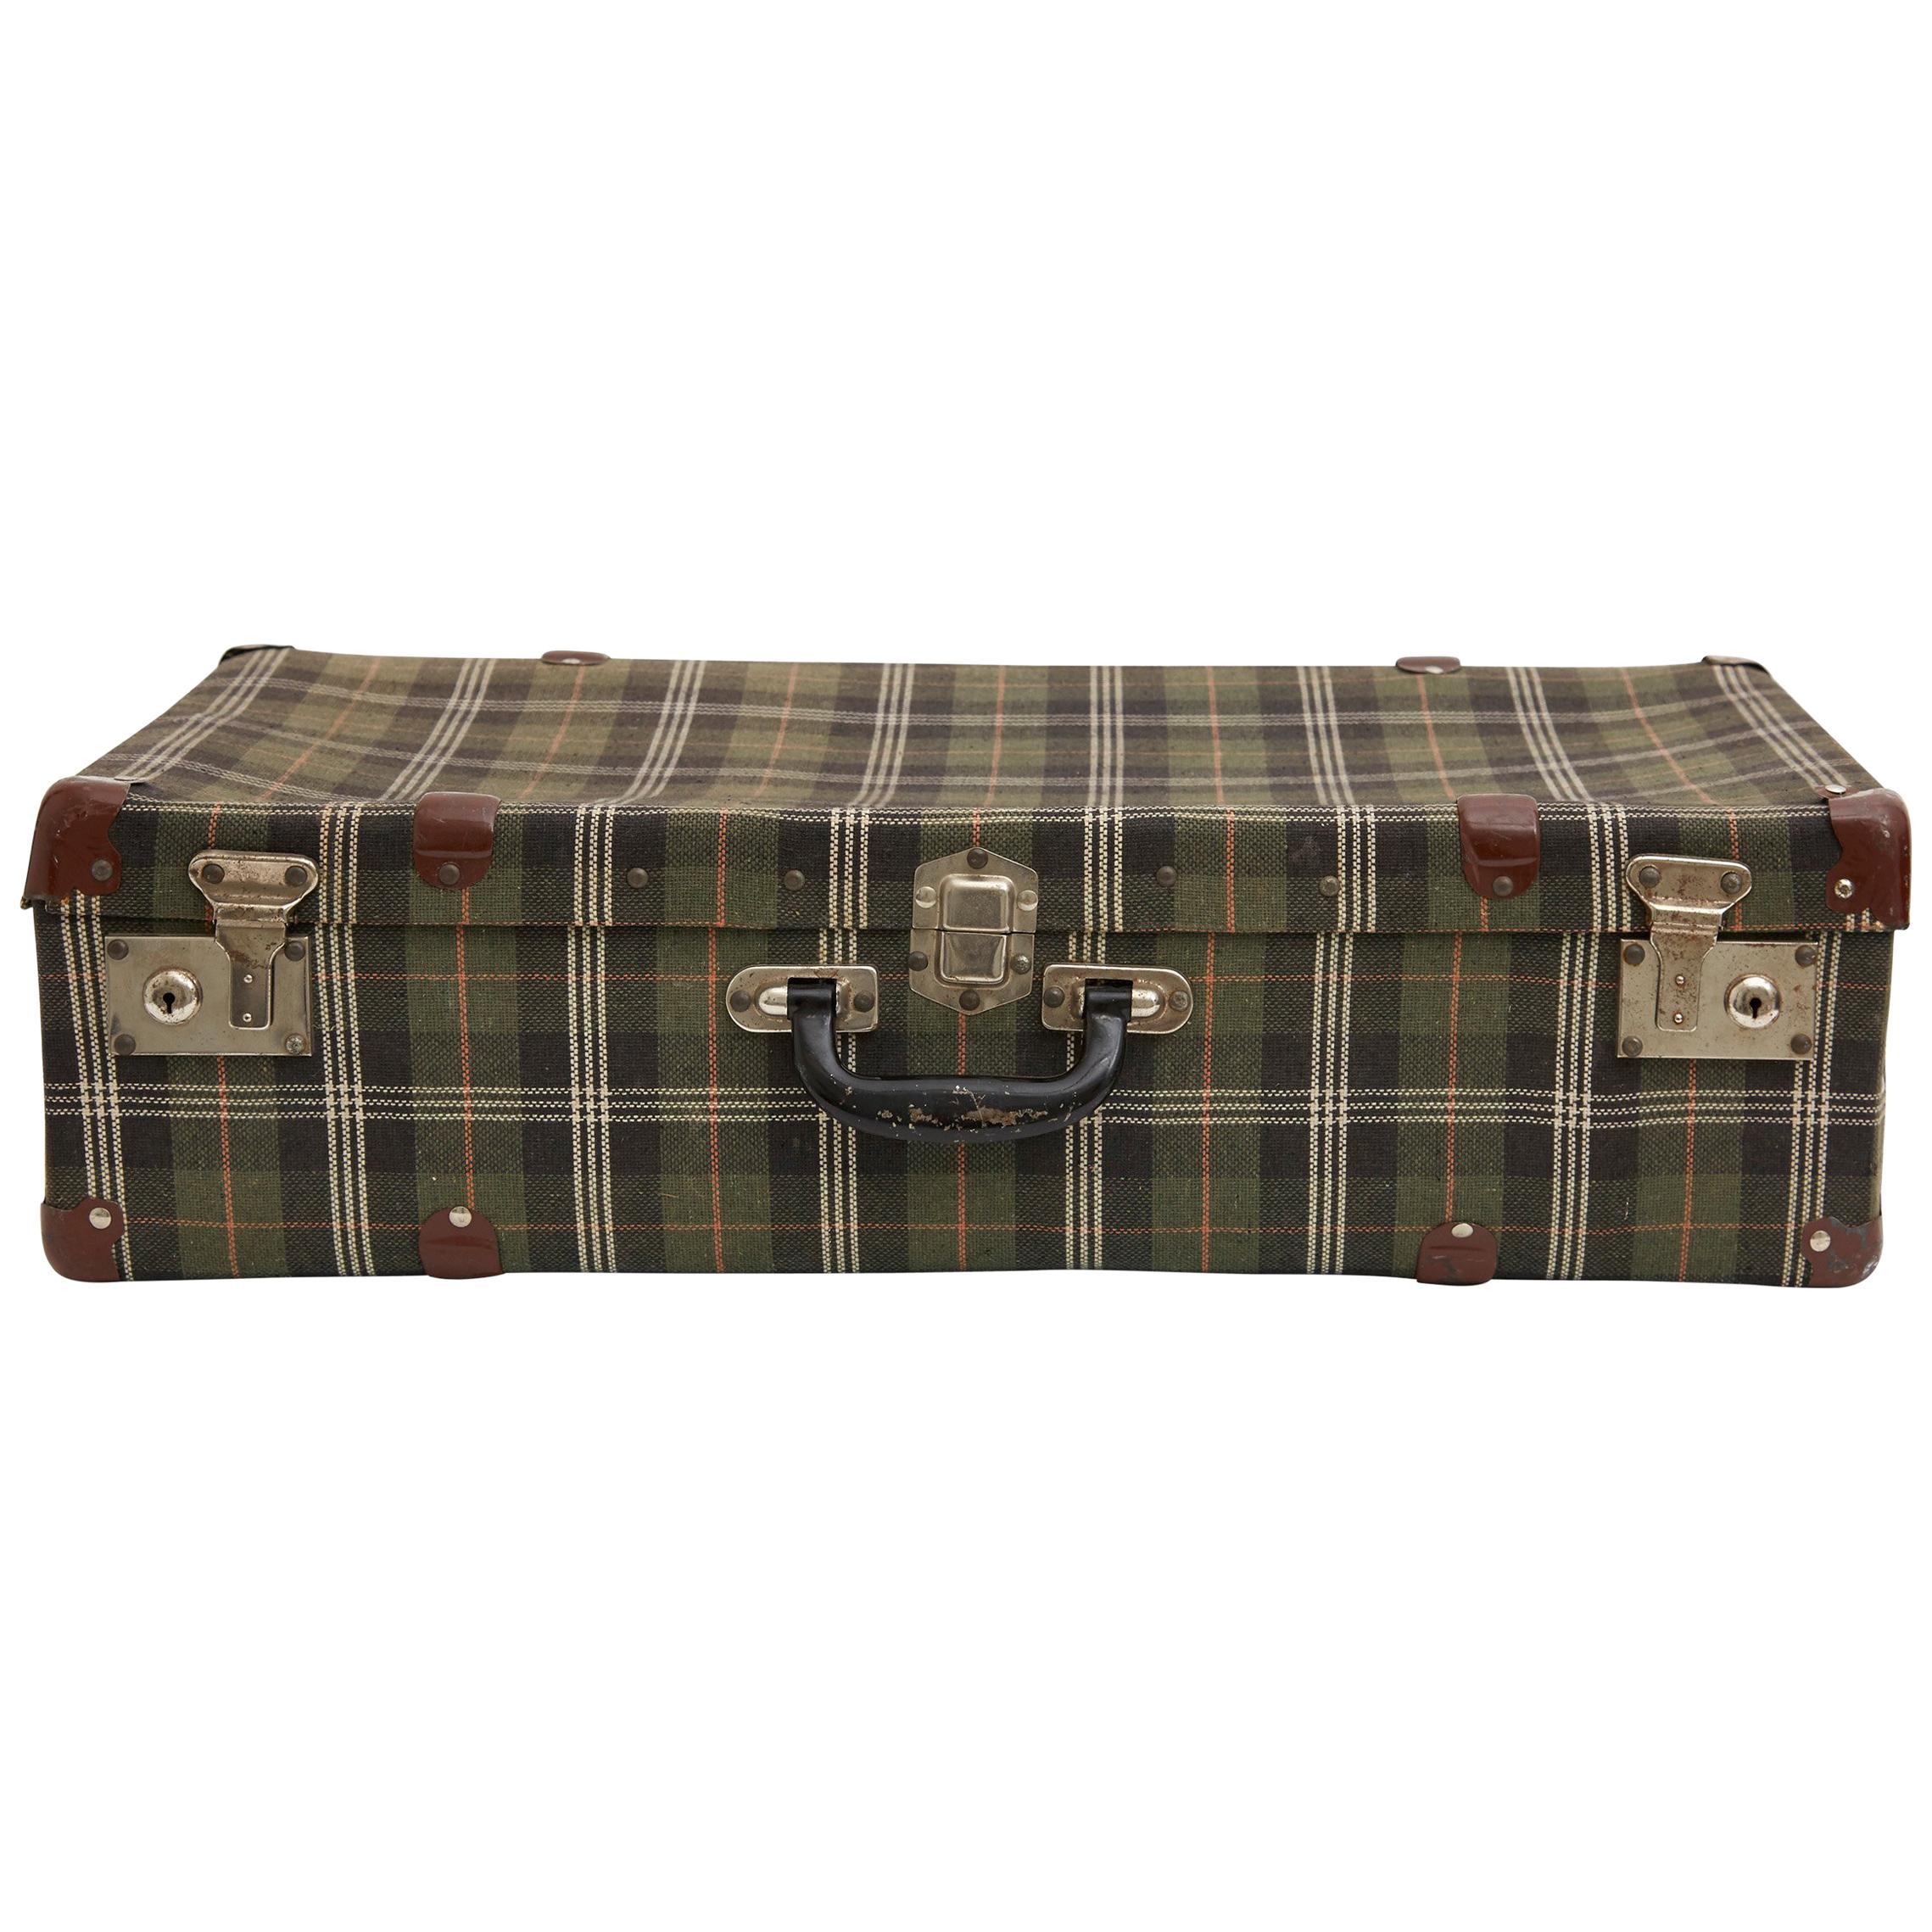 Spanish Green Plaid Twill Suitcase